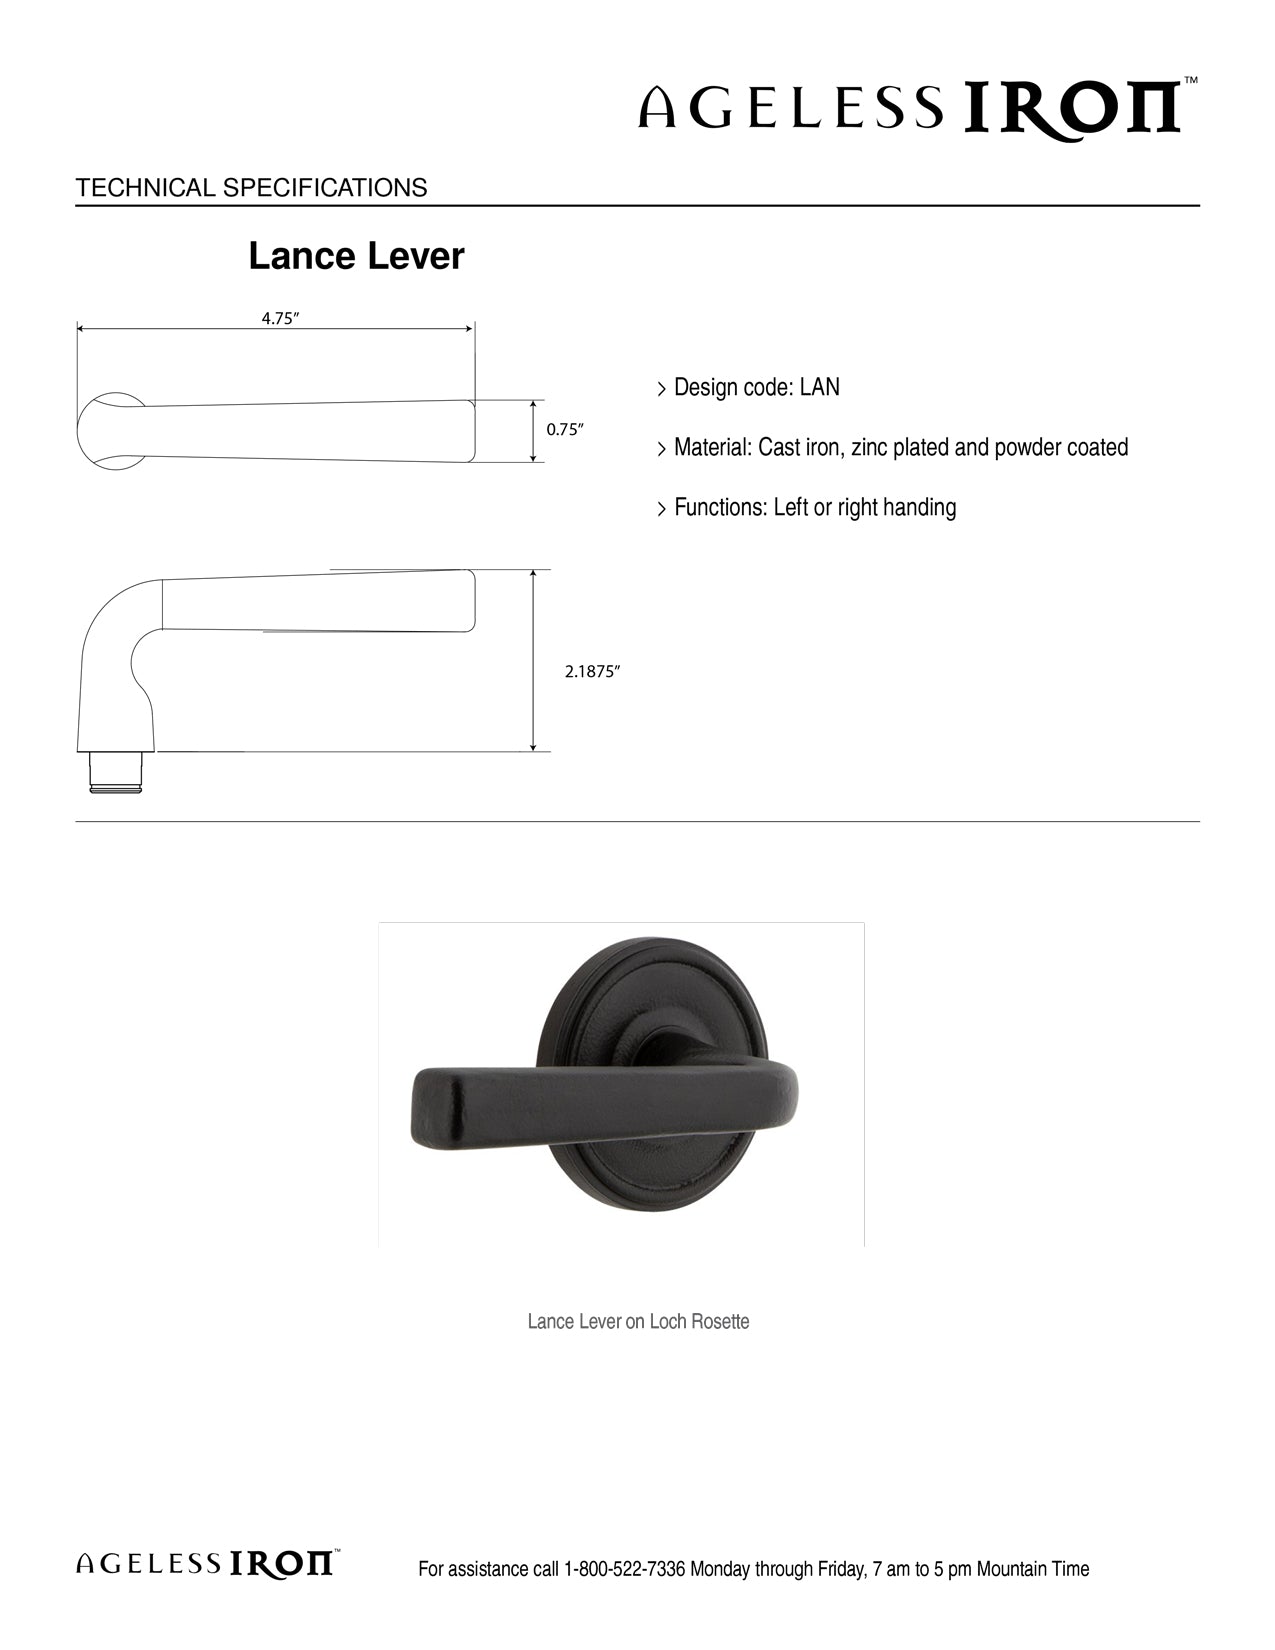 Lance Lever Technical Specs